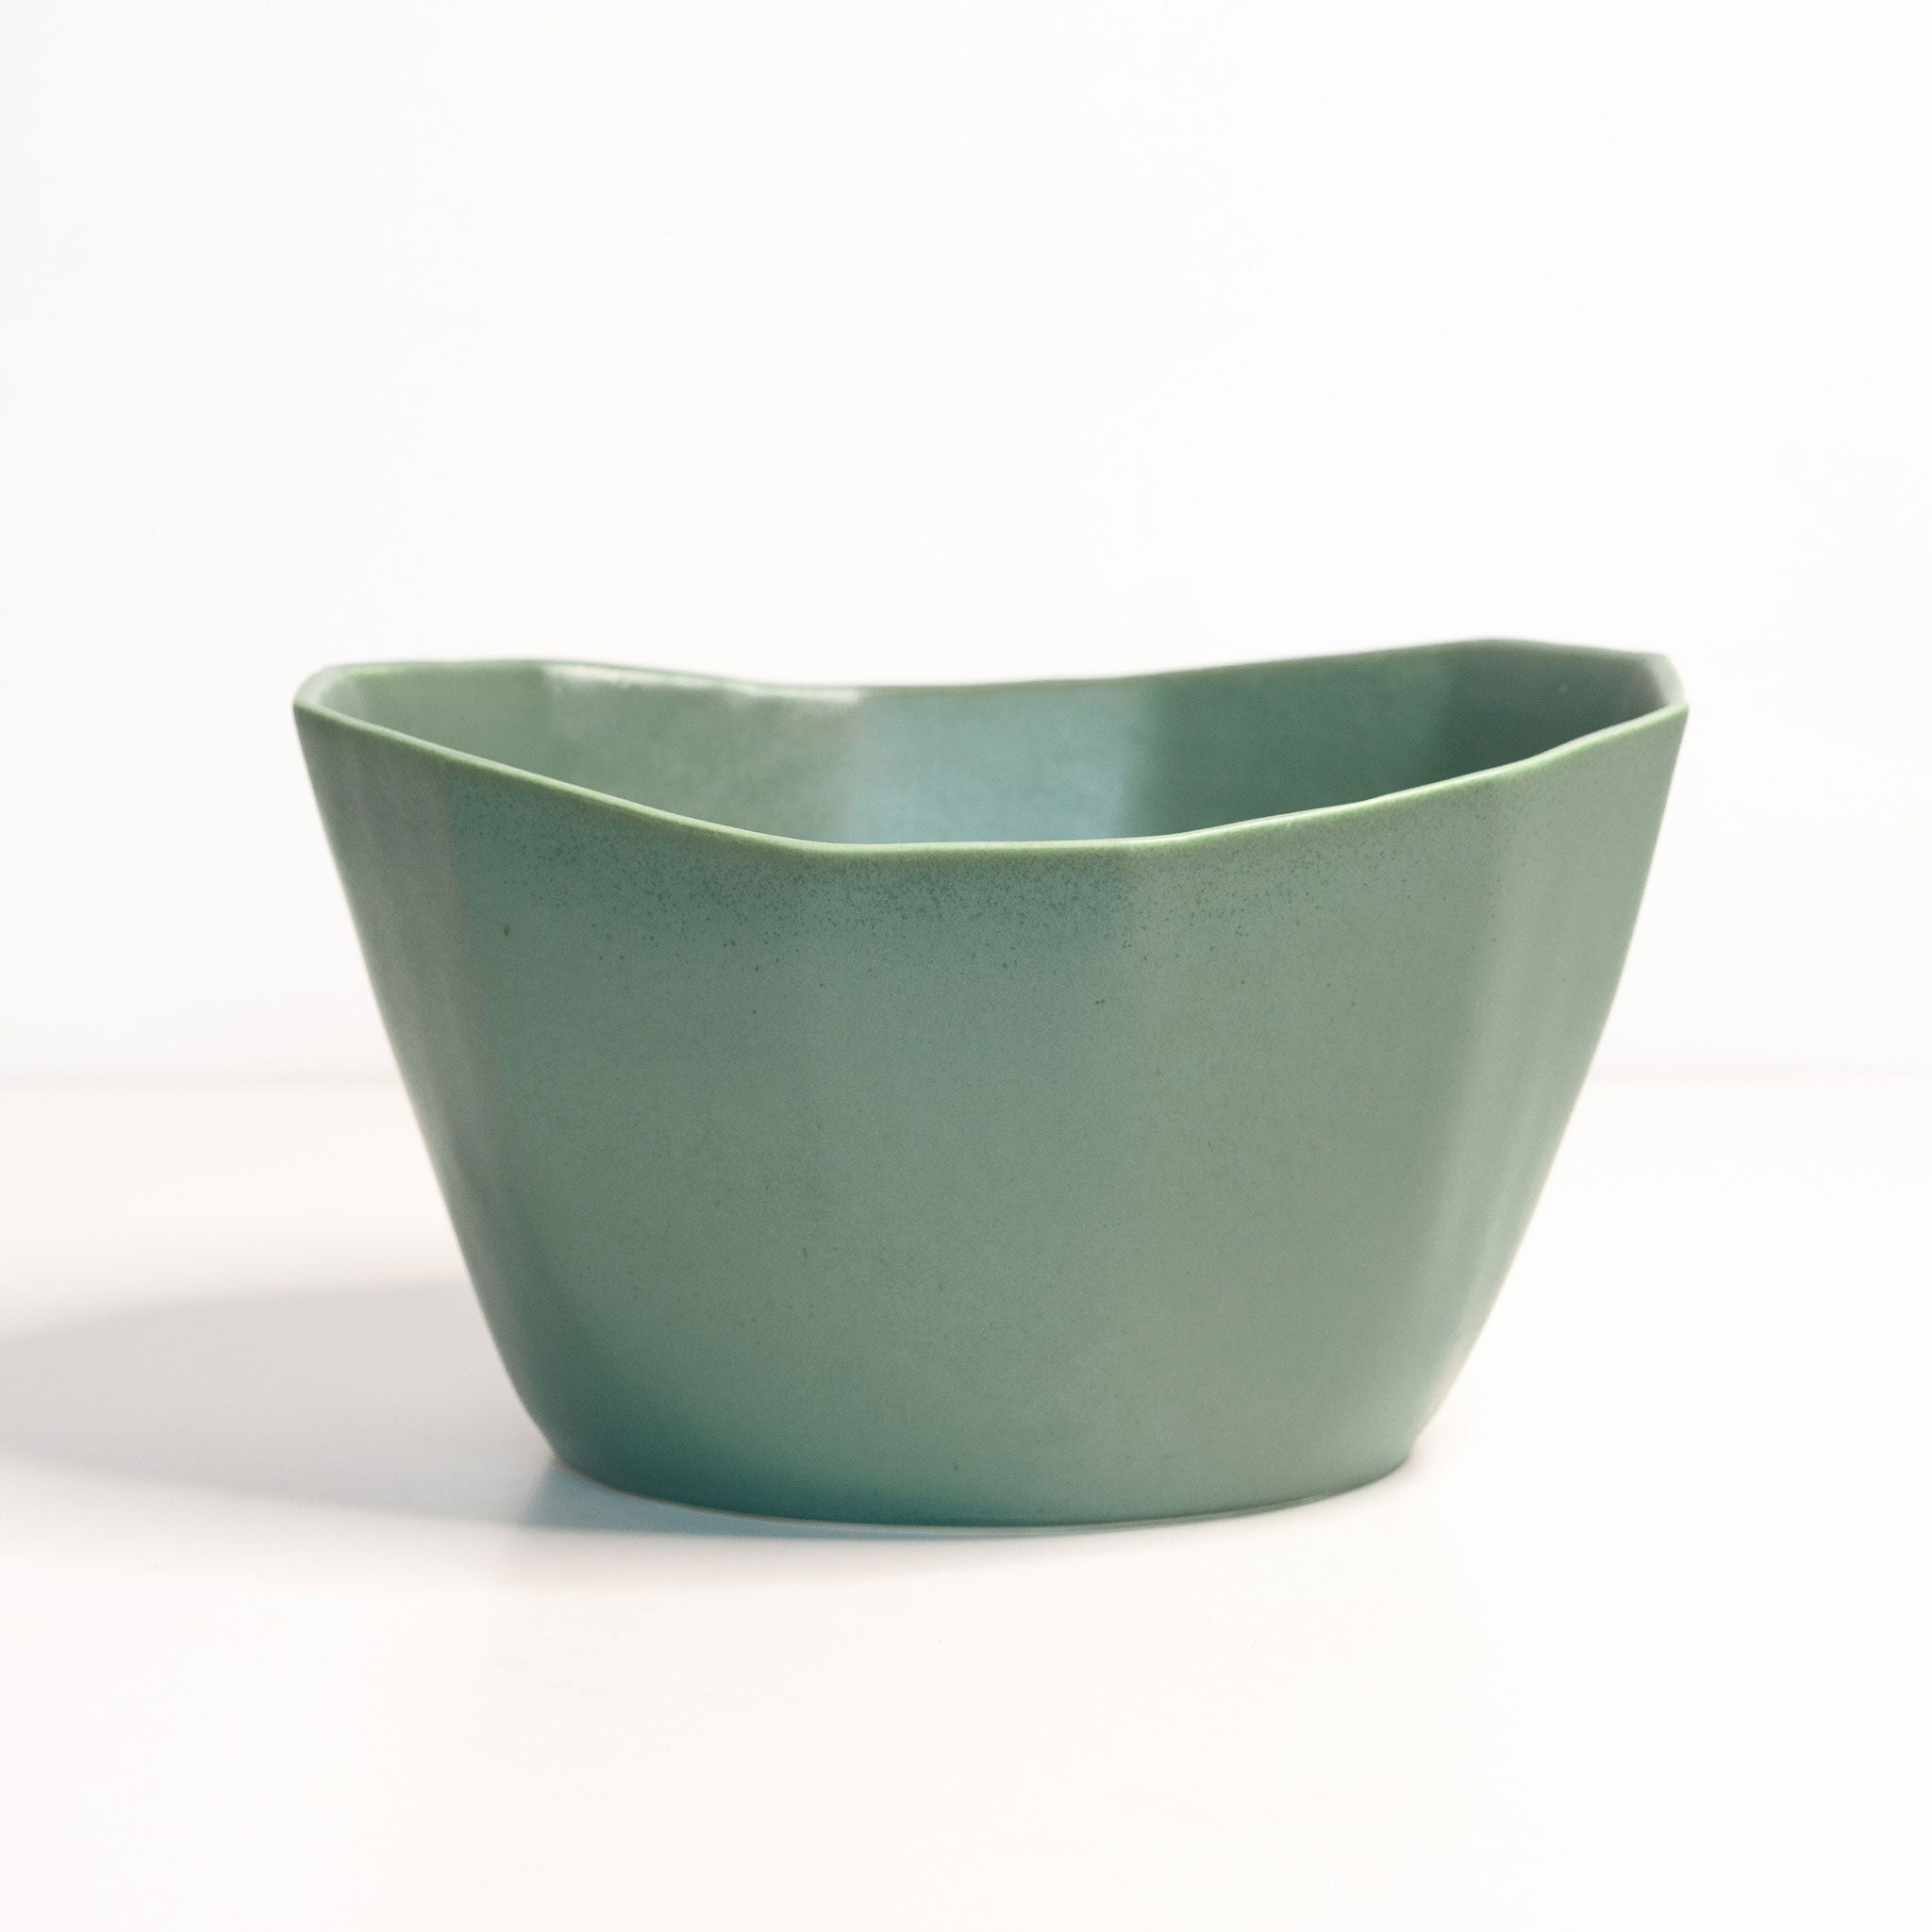 Medium Porcelain Nesting Bowl Rosemary Green The Bright Angle